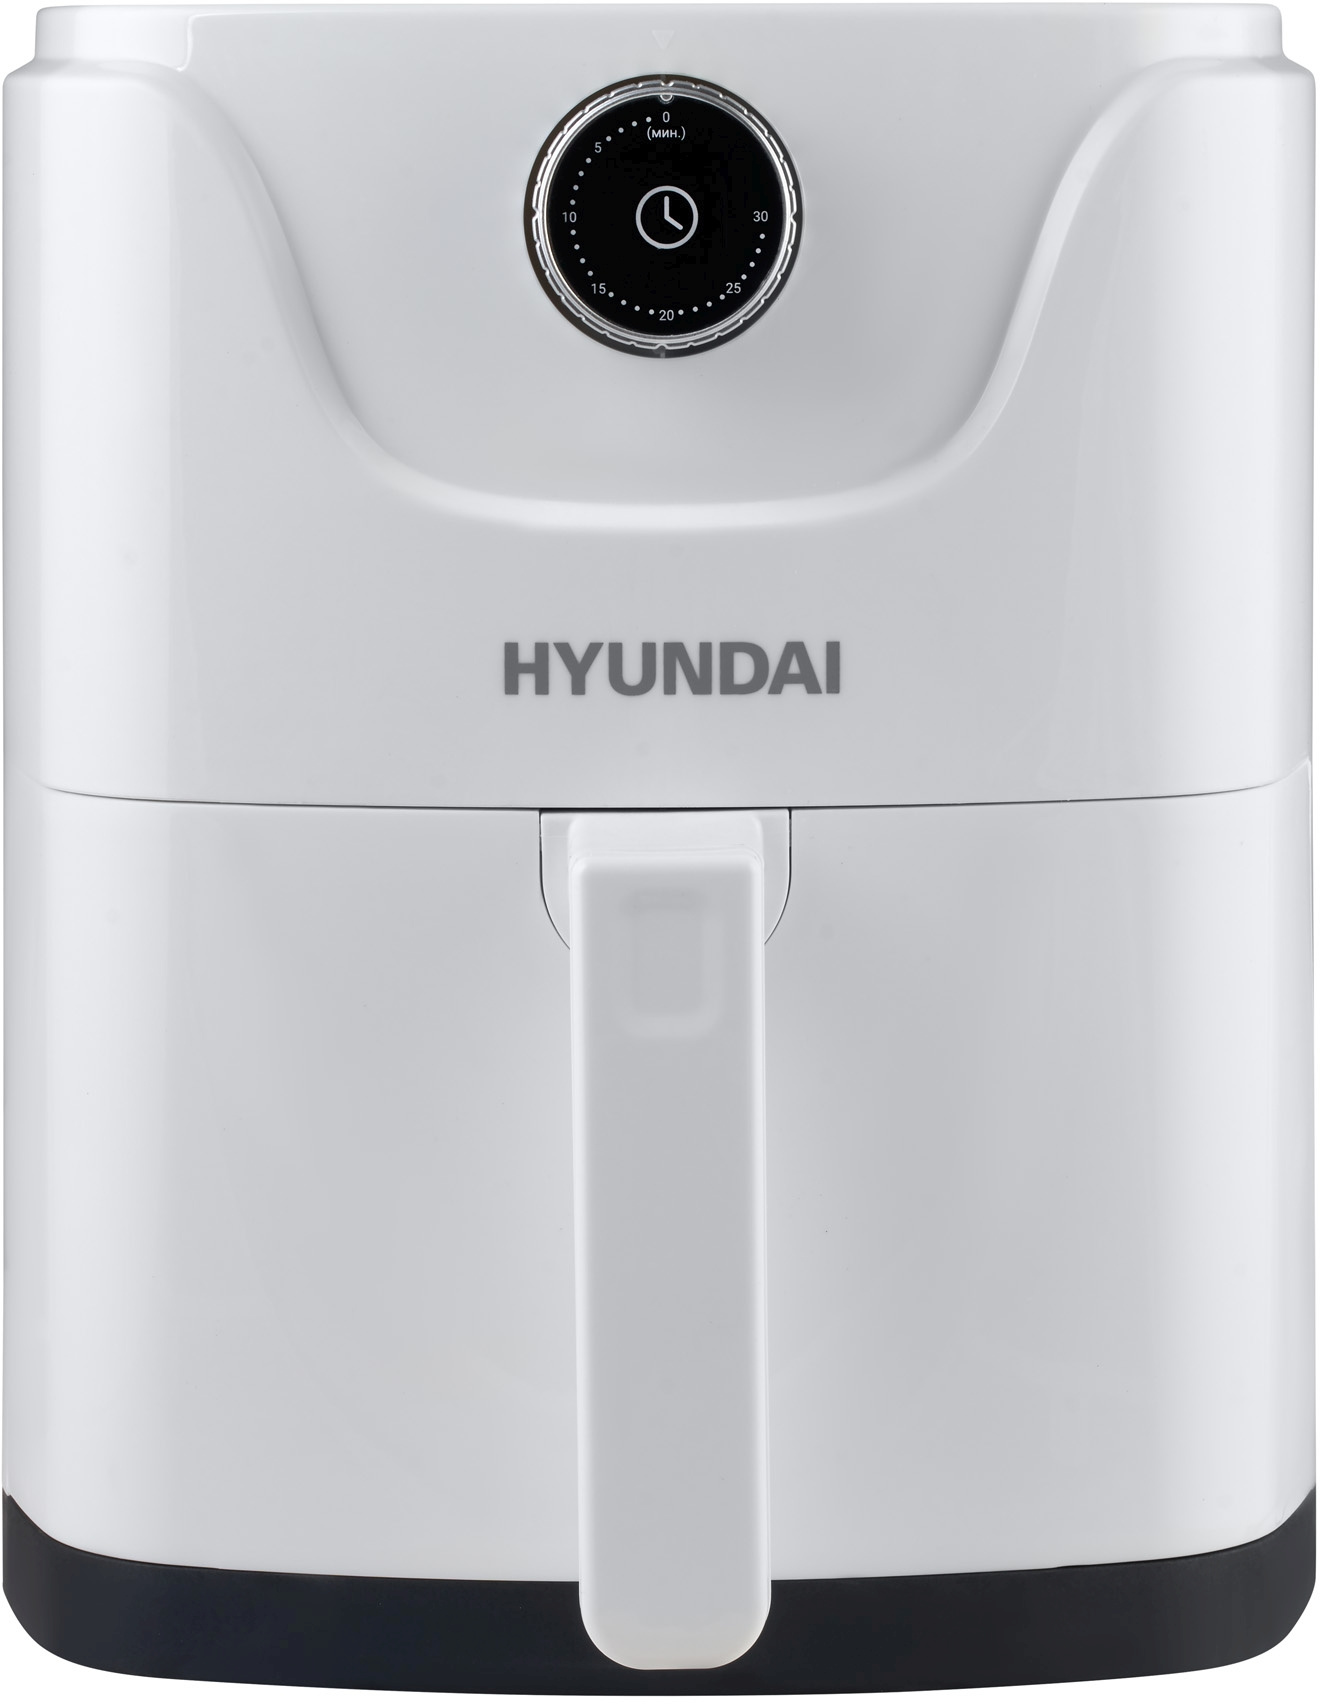 Аэрогриль Hyundai HYF-2052 1 кВт, 2.5 л, белый/серебристый (HYF-2052), цвет белый/серебристый - фото 1